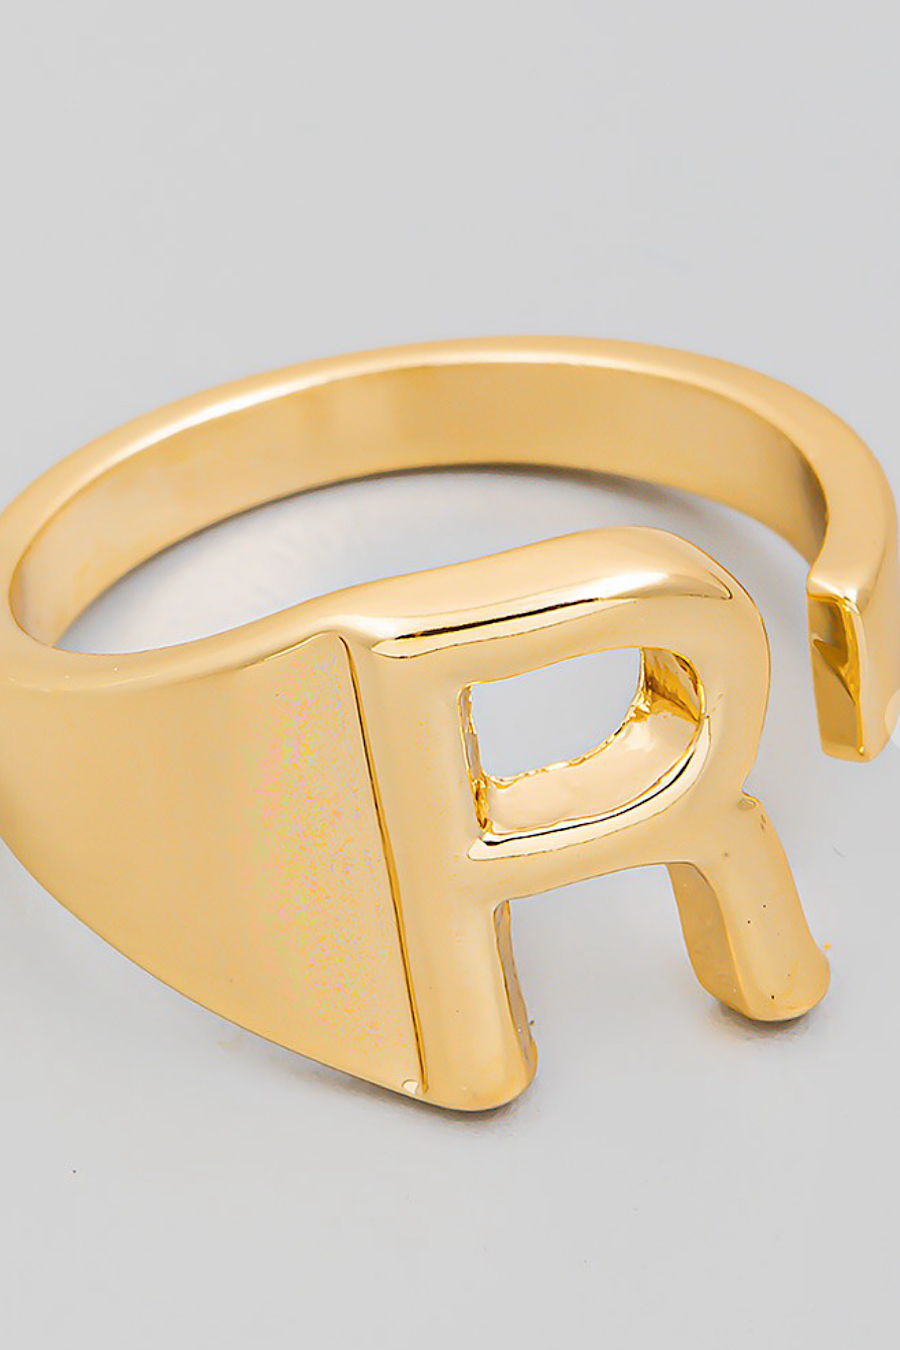 Initial Rings in Gold